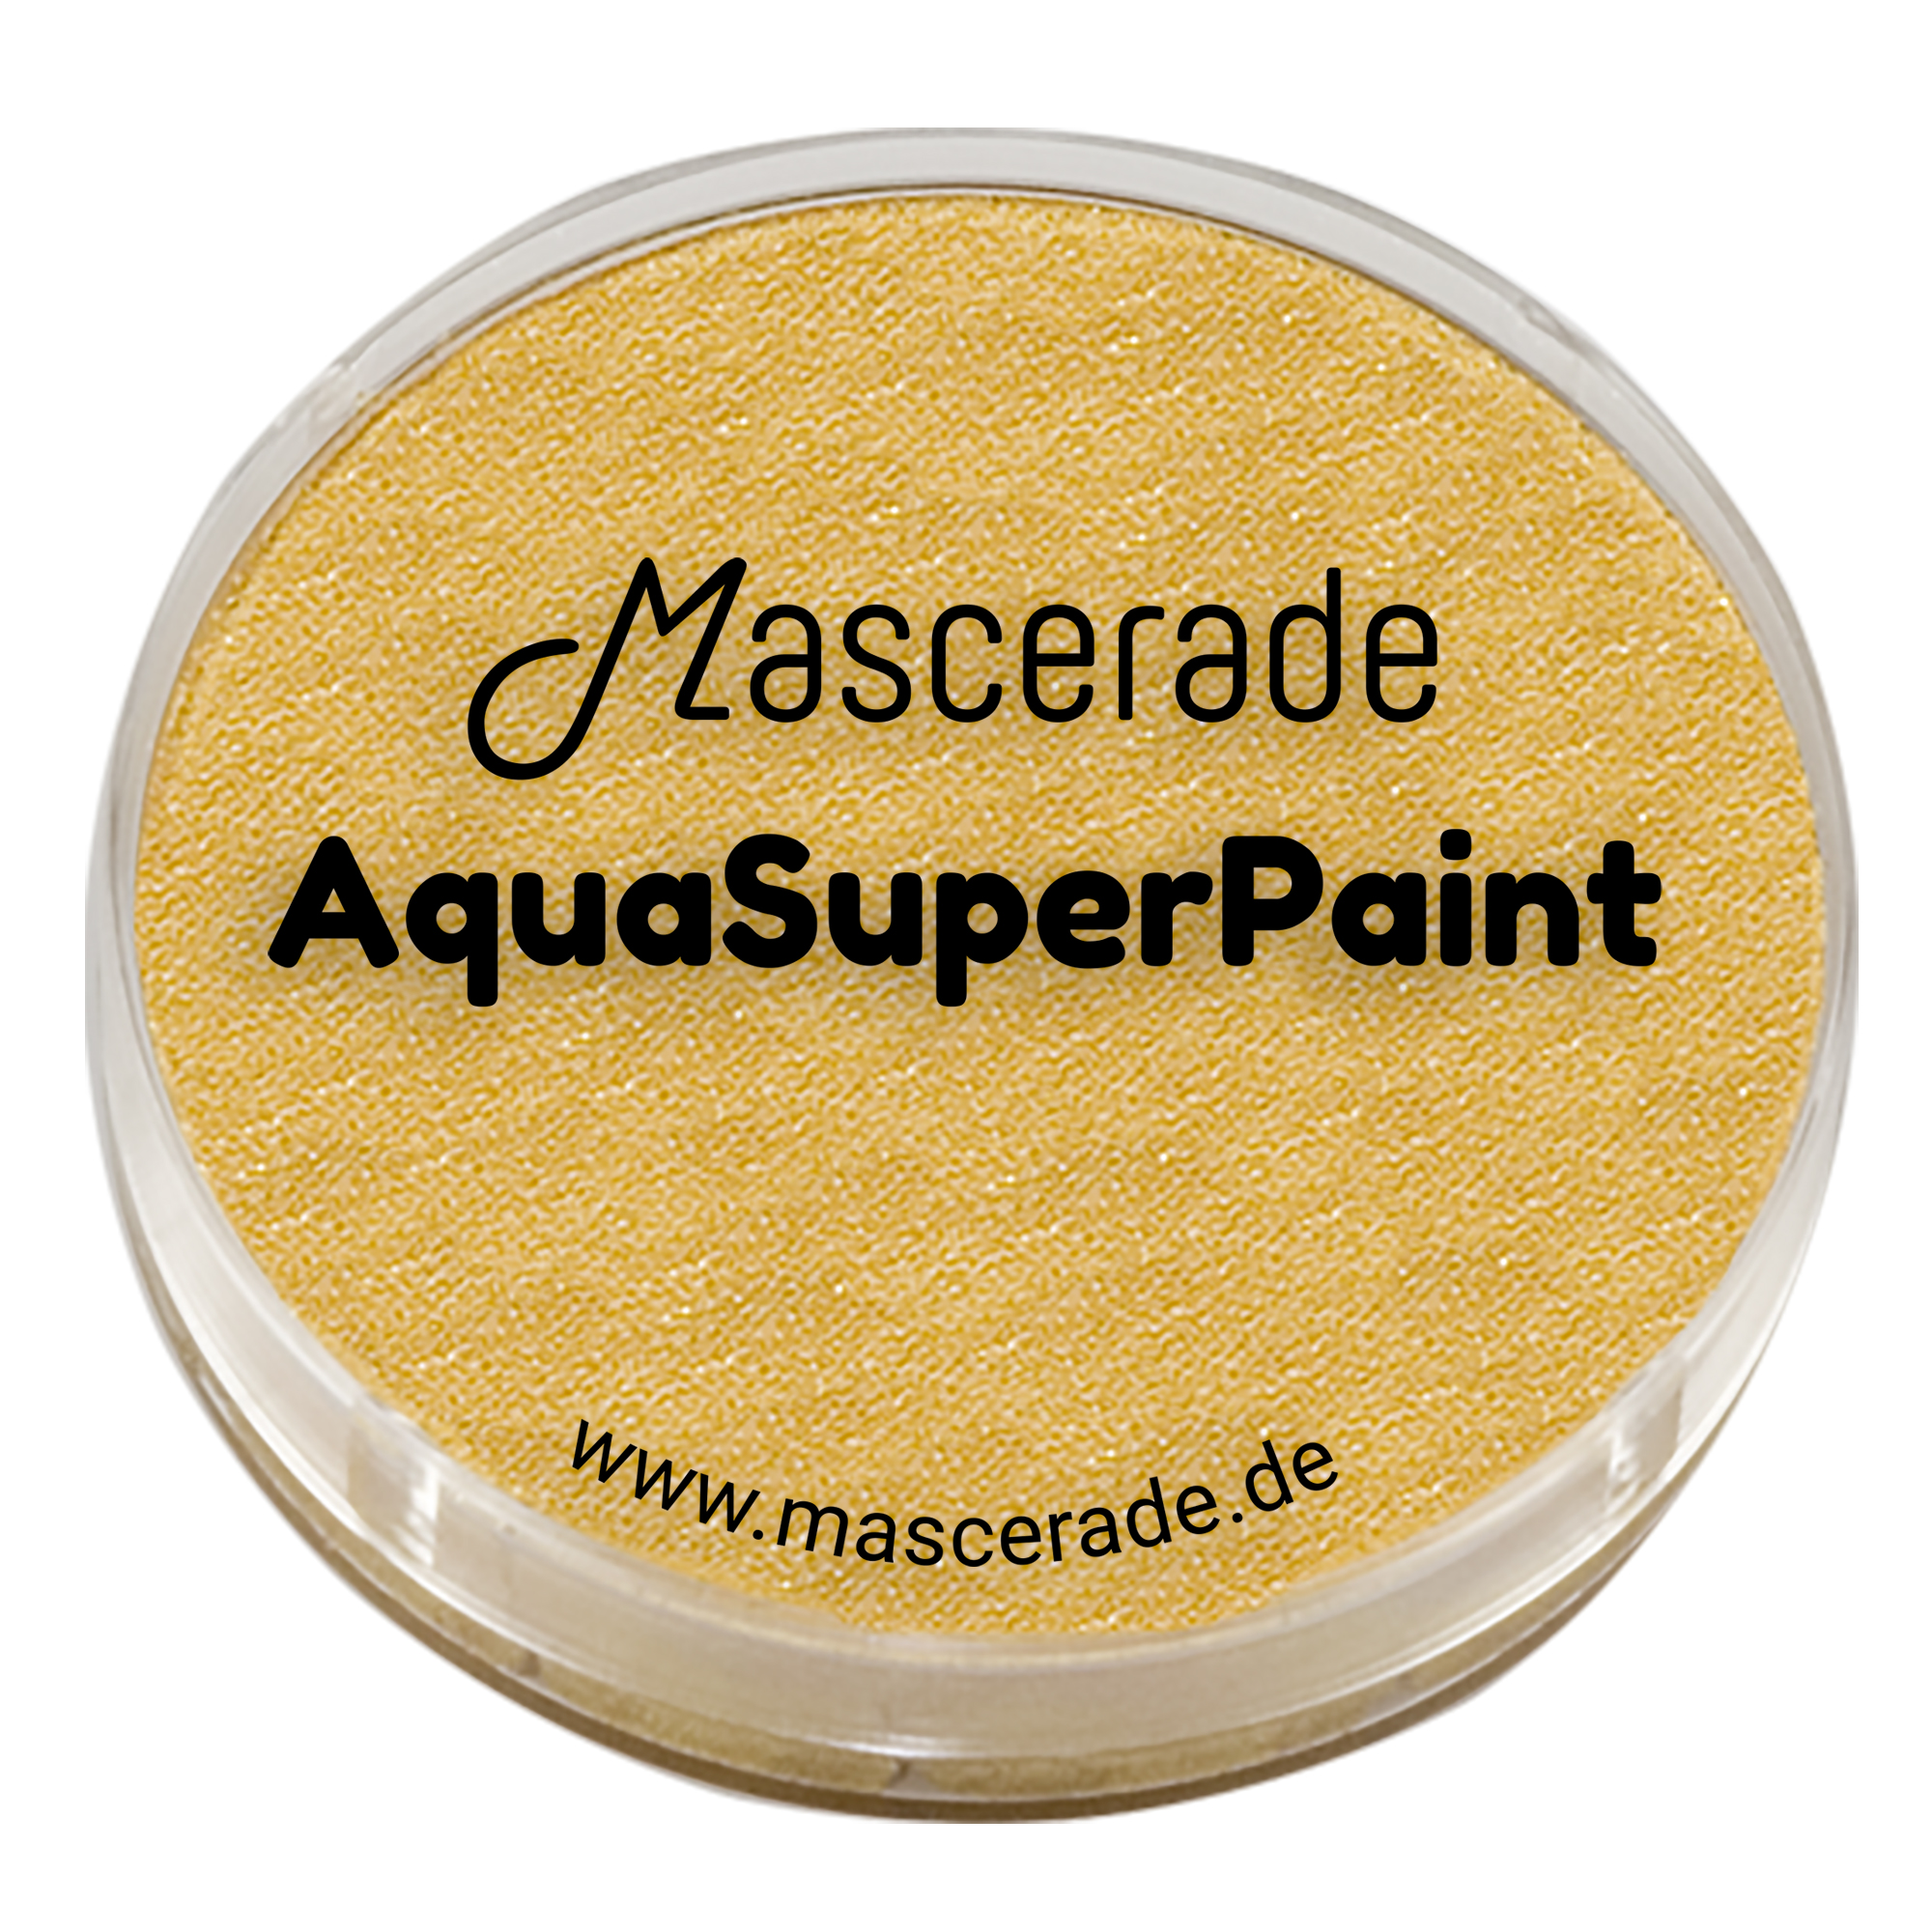 Mascerade AquaSuperPaint Gold mit Glitter 30 ml Dose